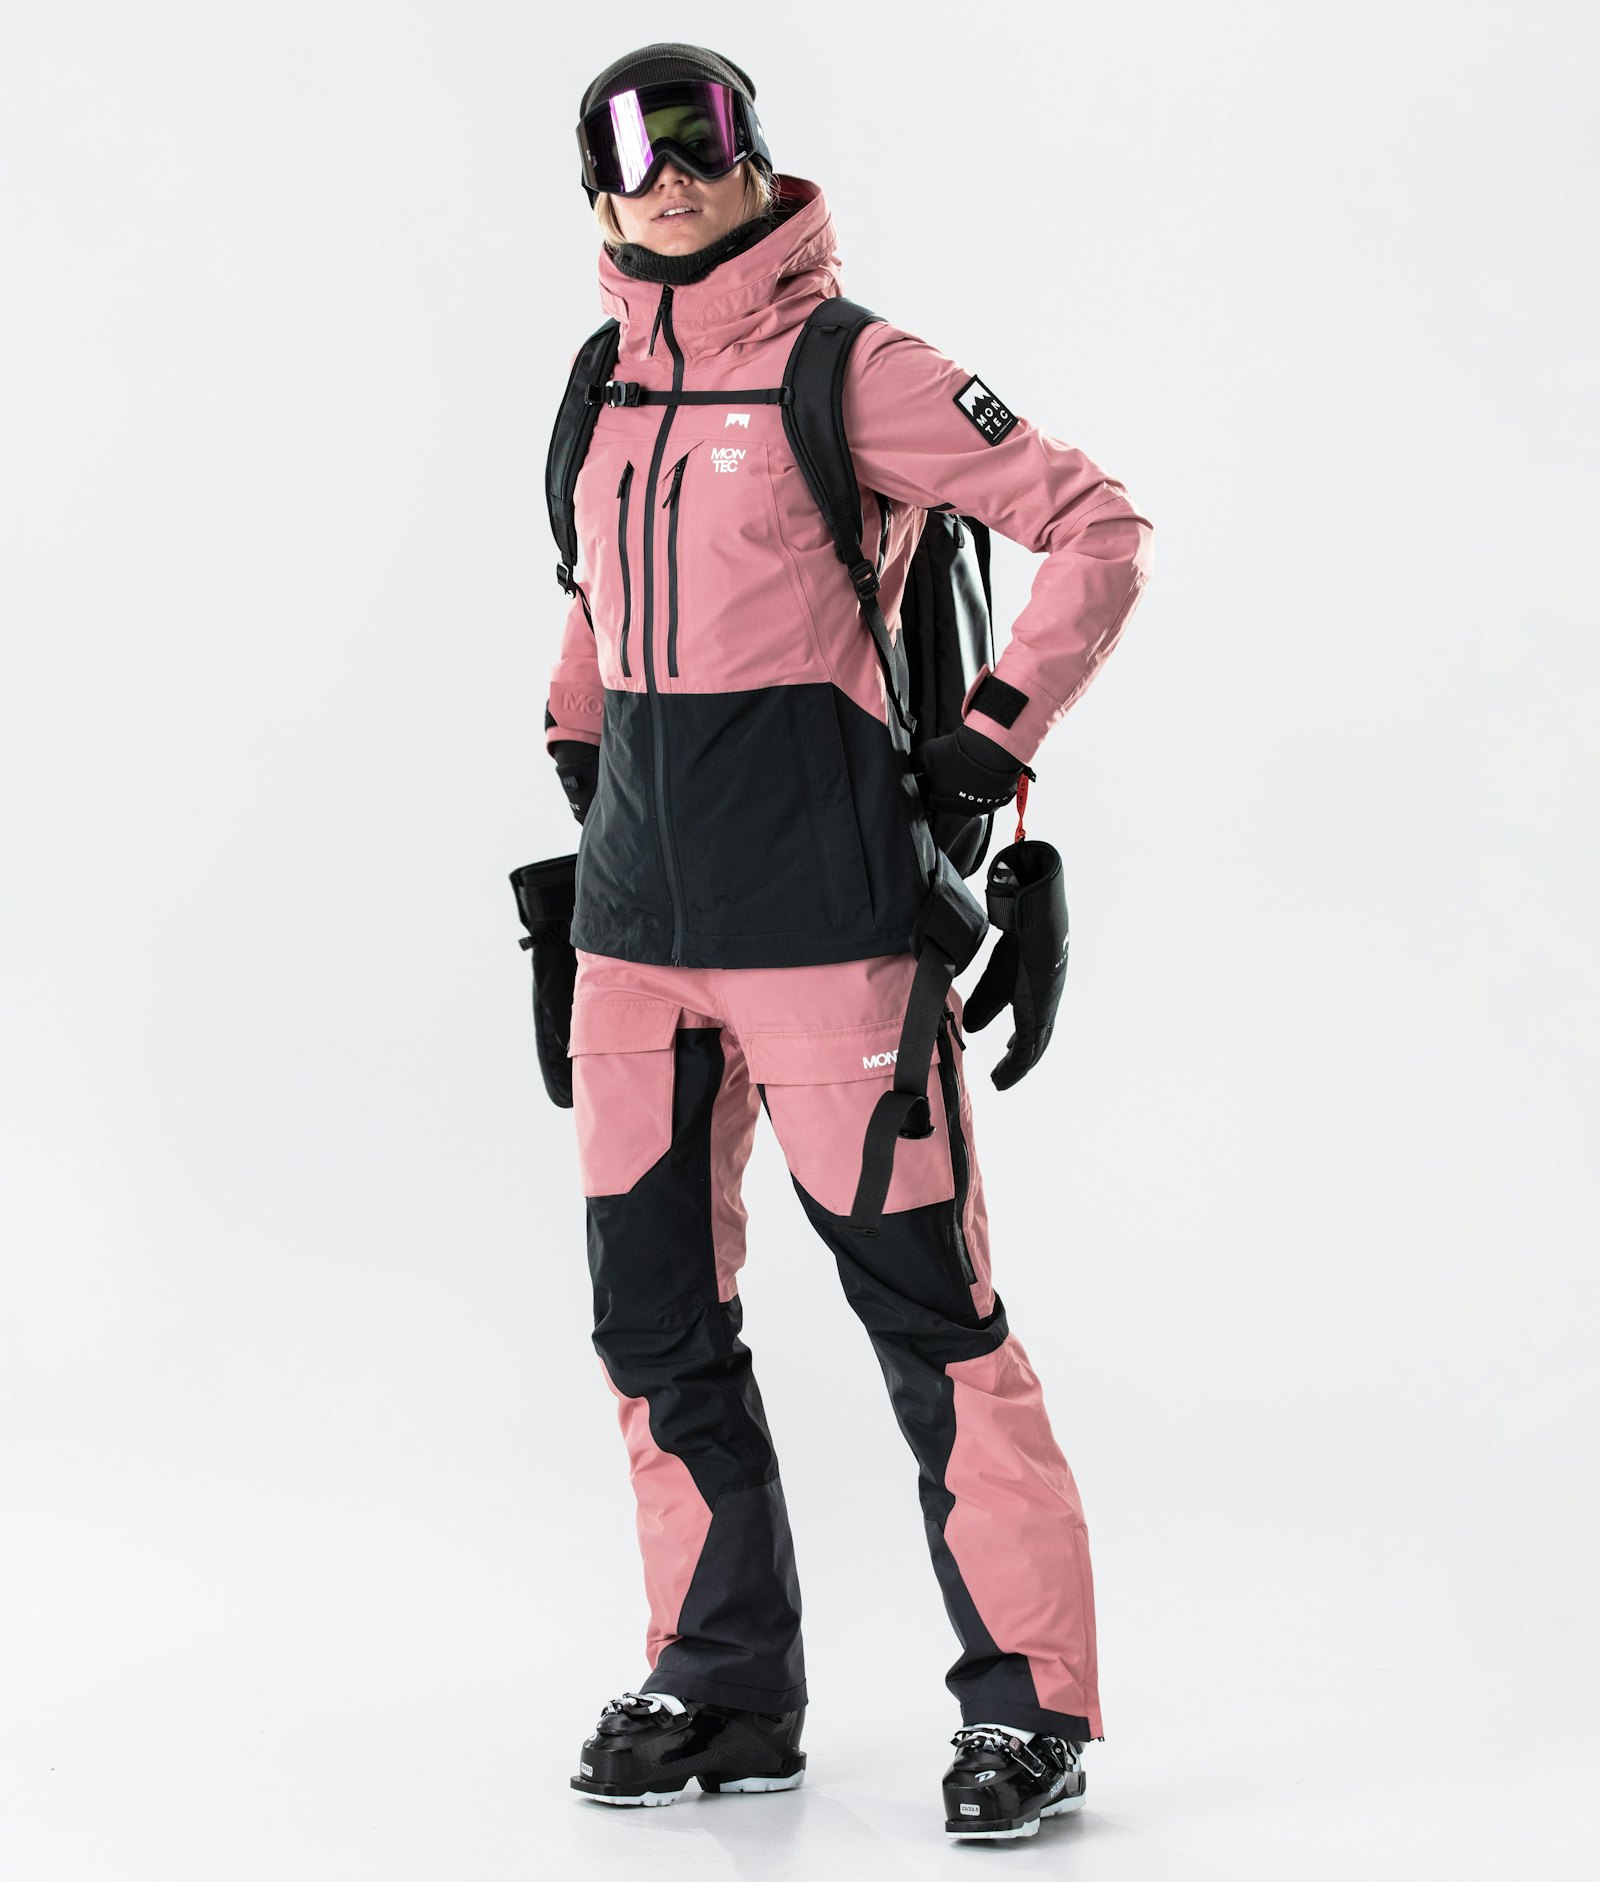 Moss W 2020 Chaqueta Esquí Mujer Pink/Black